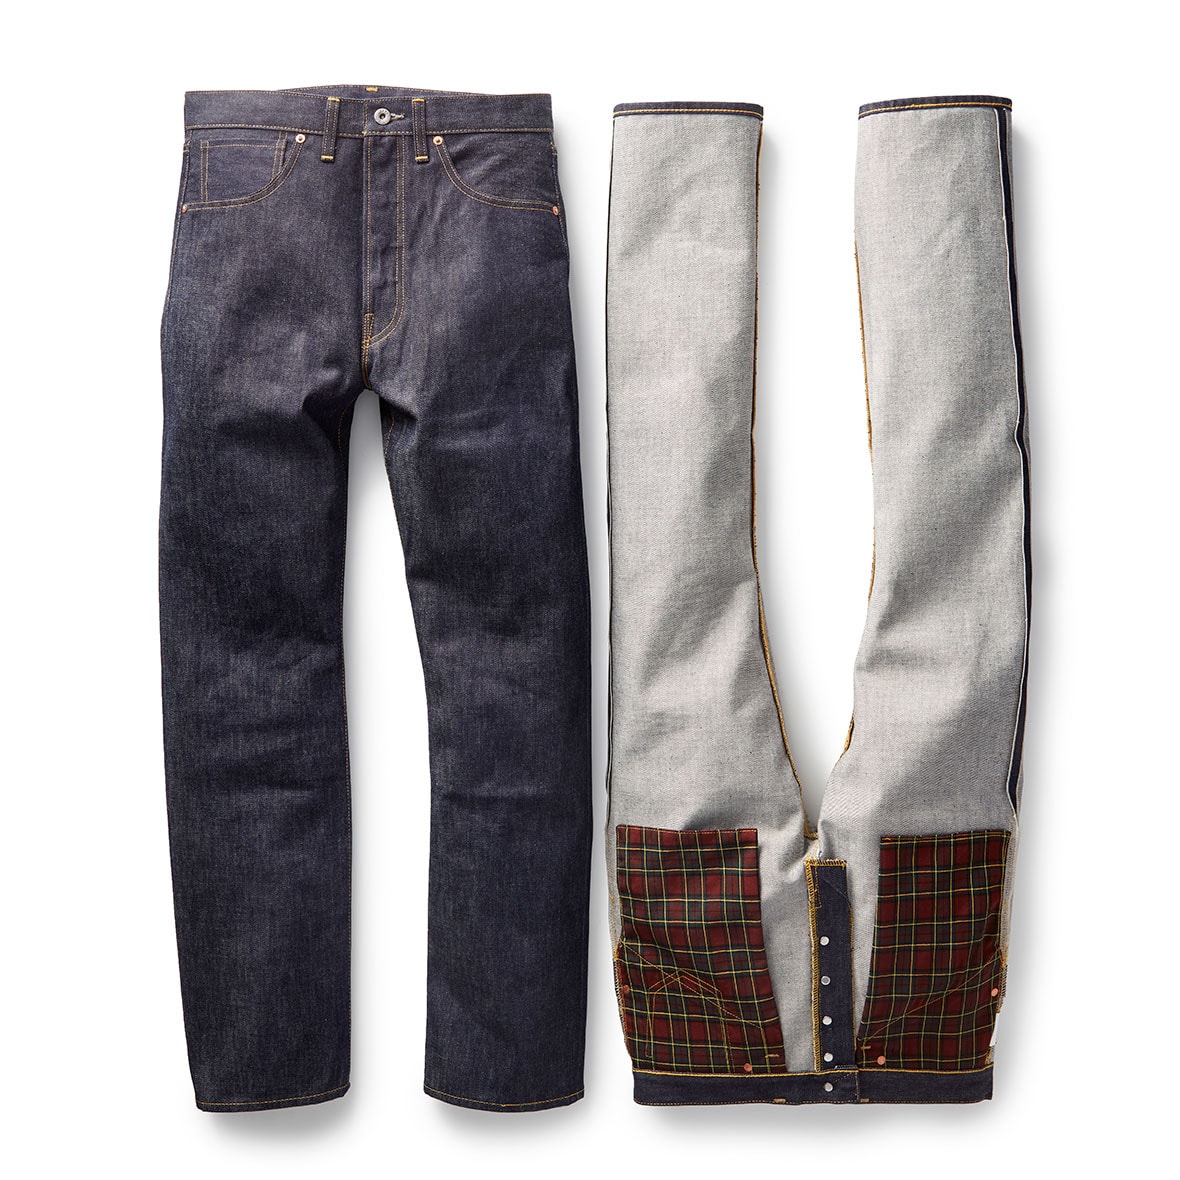 Levi's Vintage Clothing "Perfect Imperfections" LVC white oak cone mills denim collection 1944 jeans 